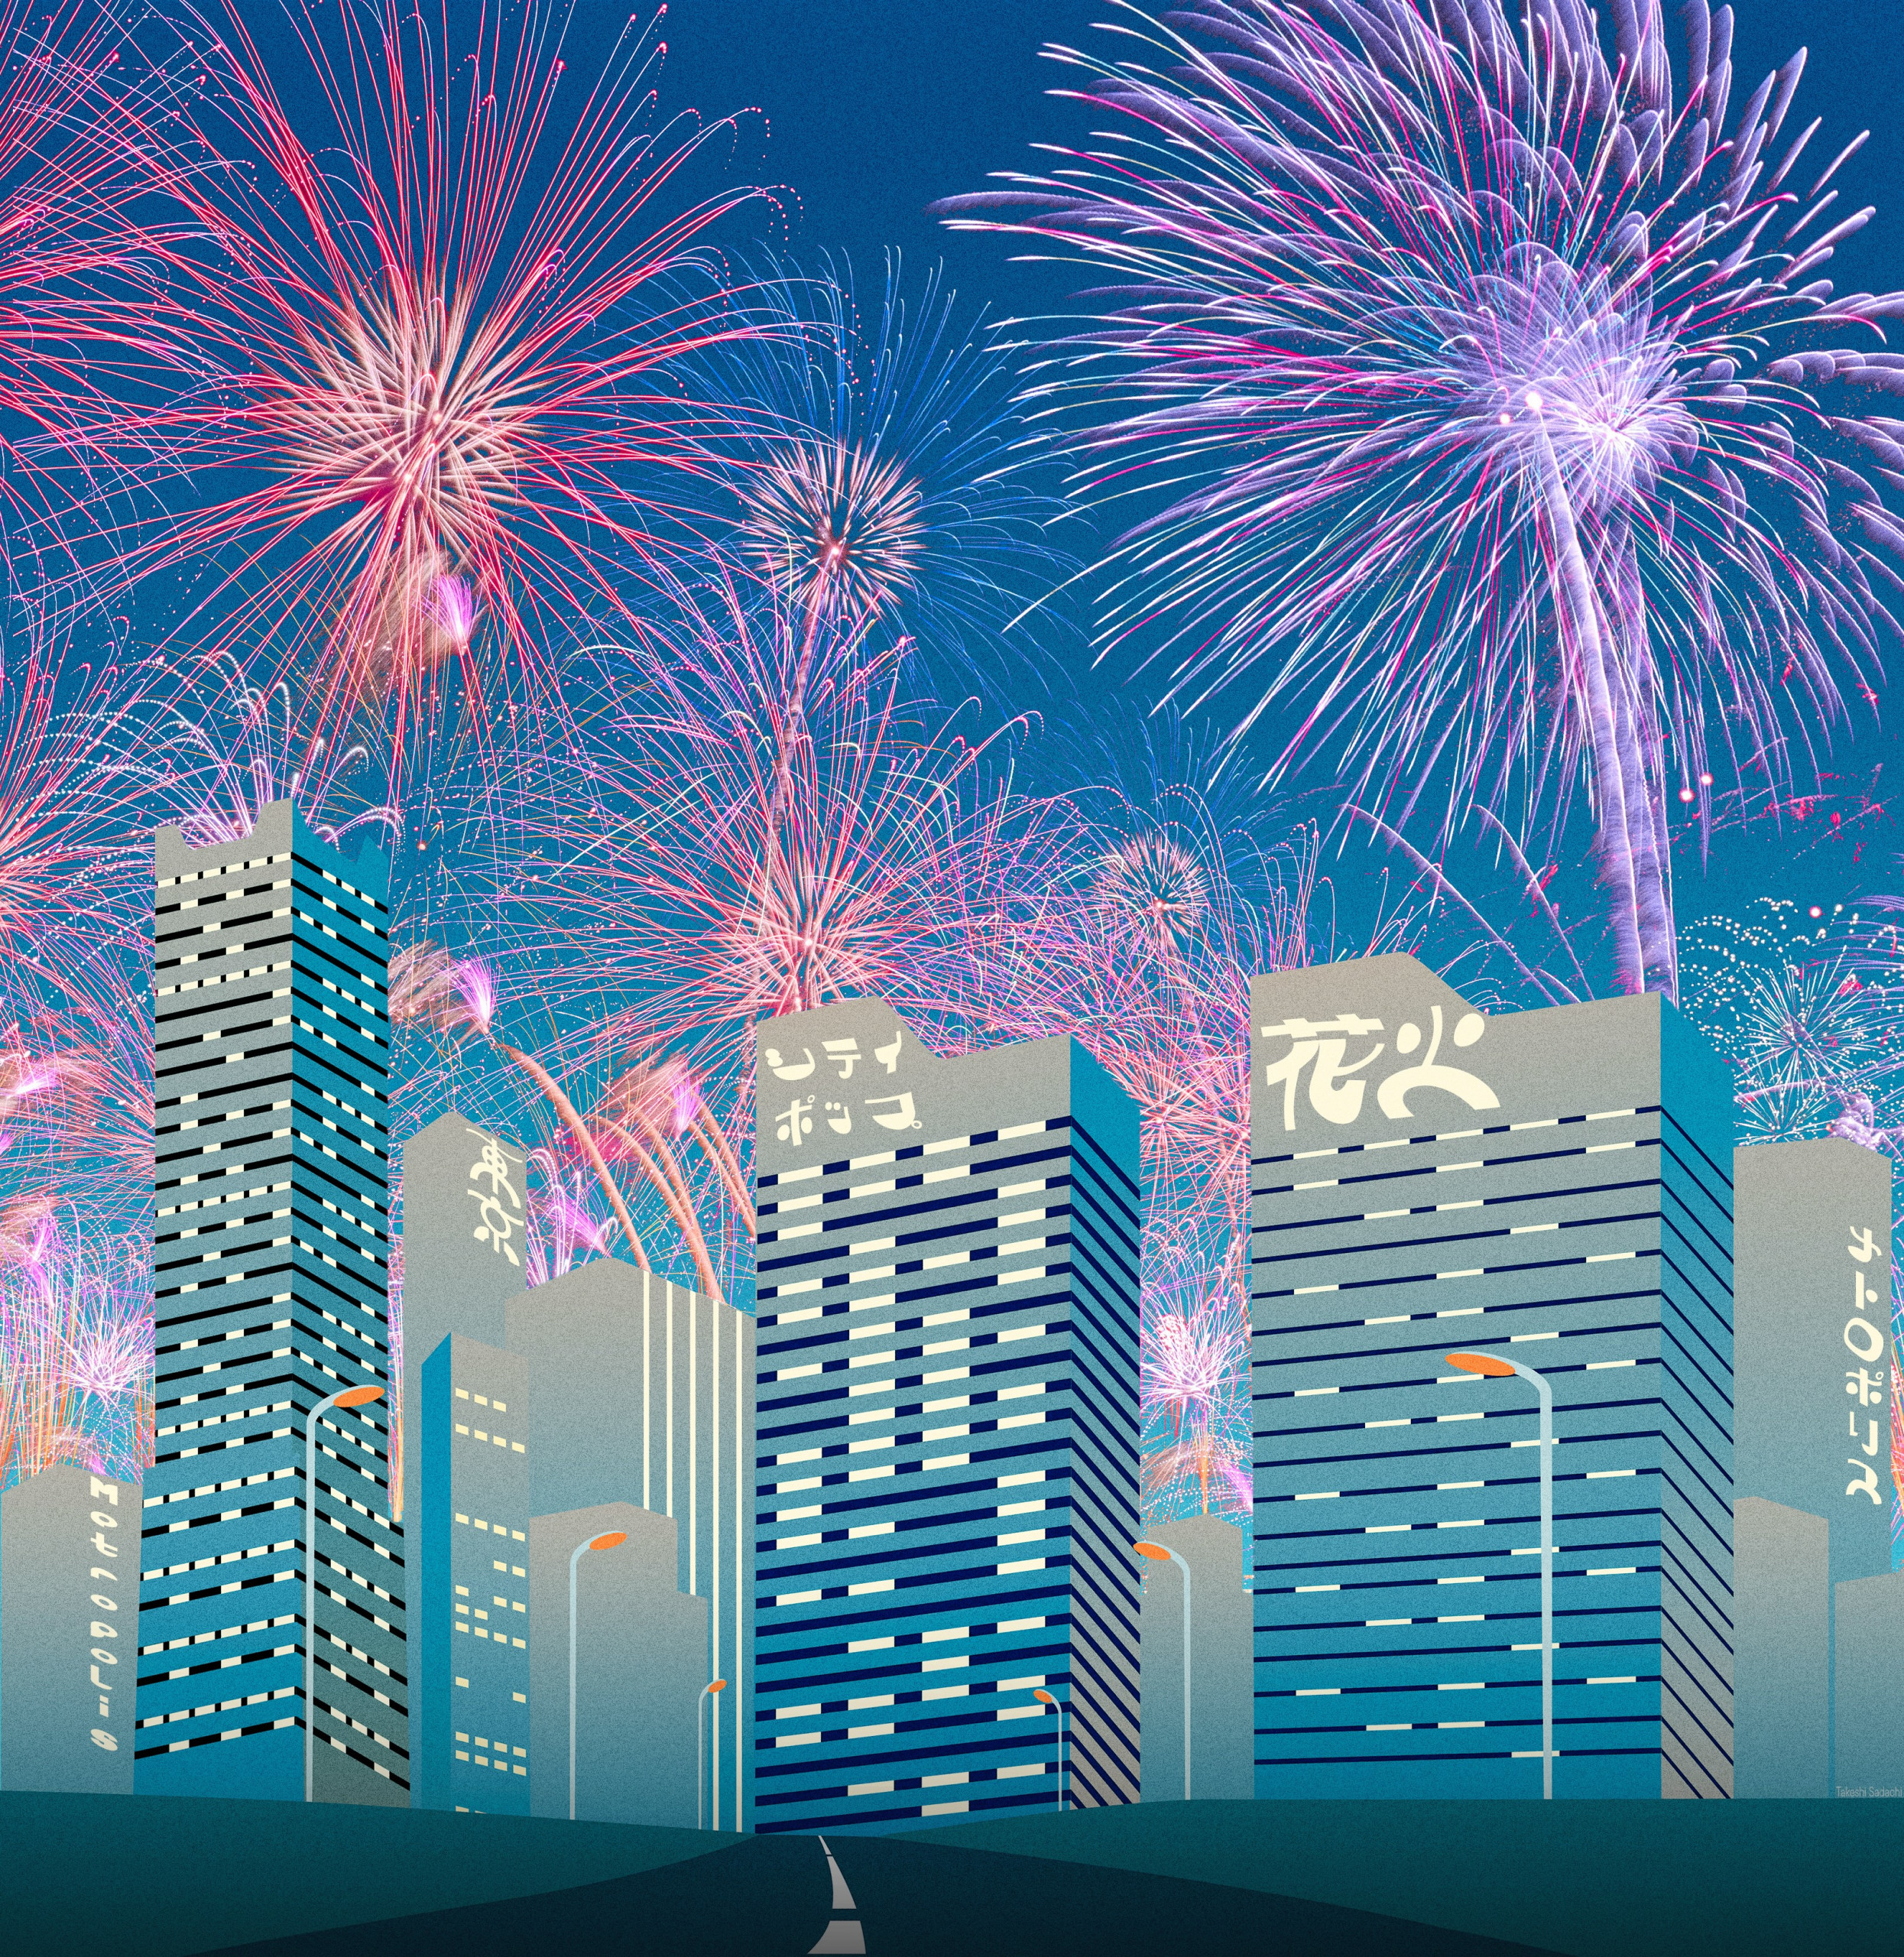 aesthetic illustration of skyline and fireworks, visualizing city pop 